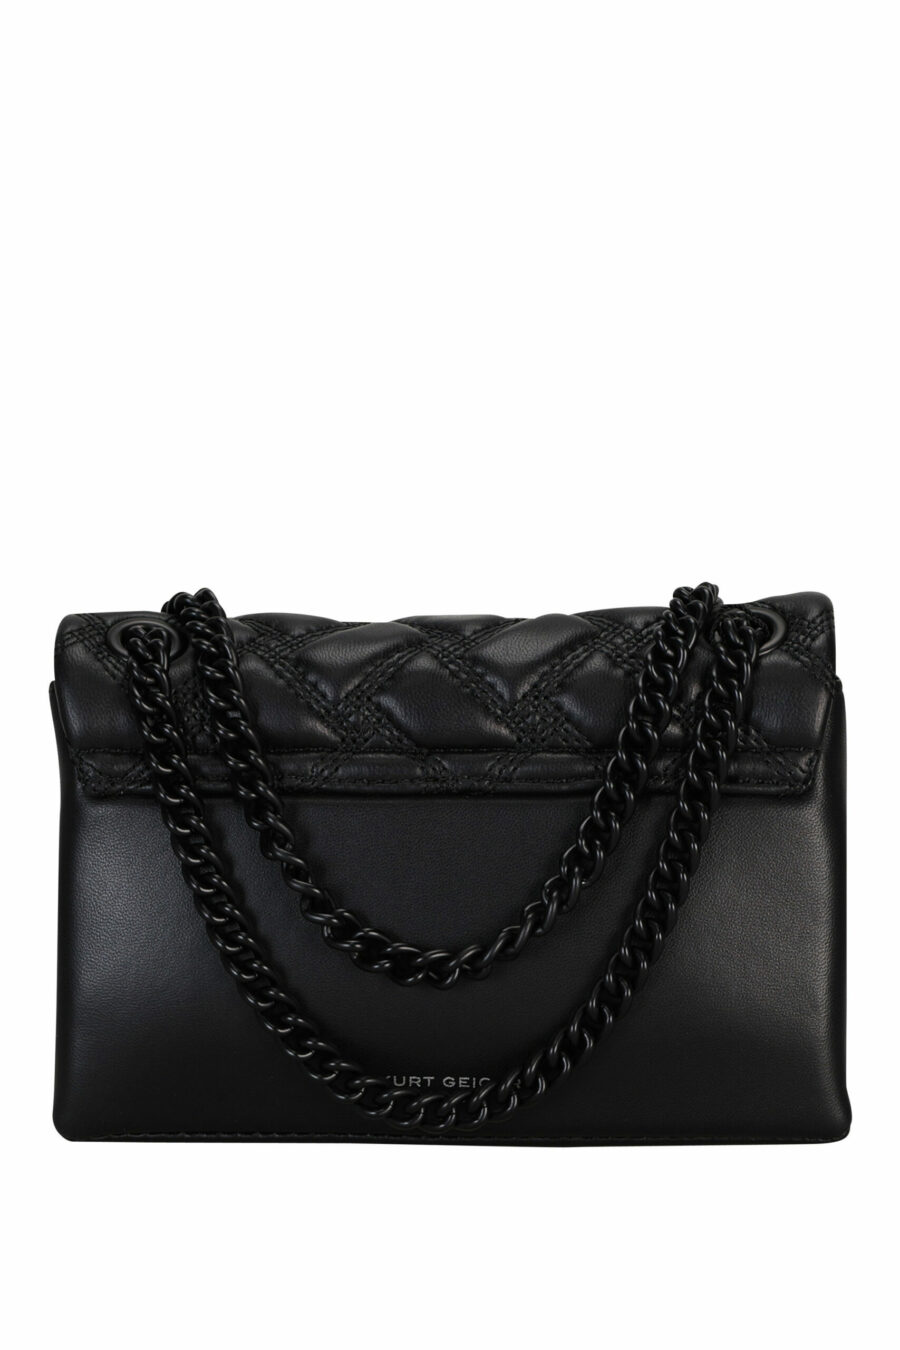 Mini black shoulder bag with diagonal lines and black eagle logo with black cristrals - 5020413709135 2 scaled